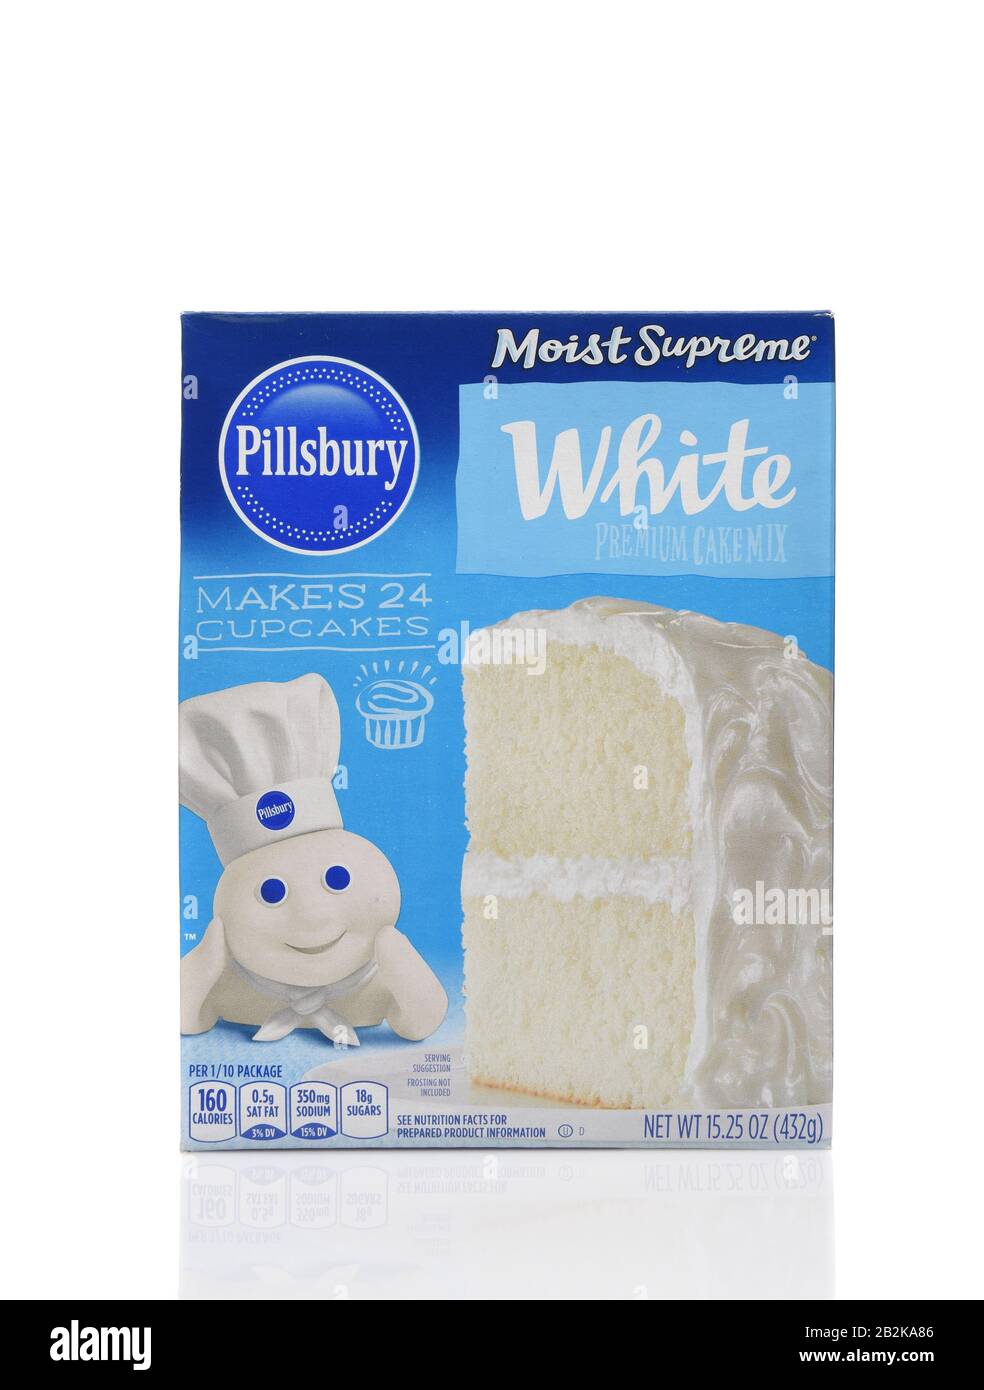 IRVINE, CALIFORNIA - AUGUST 20, 2019: A box of Pillsbury Moist Supreme Classic White Cake Mix. Stock Photo